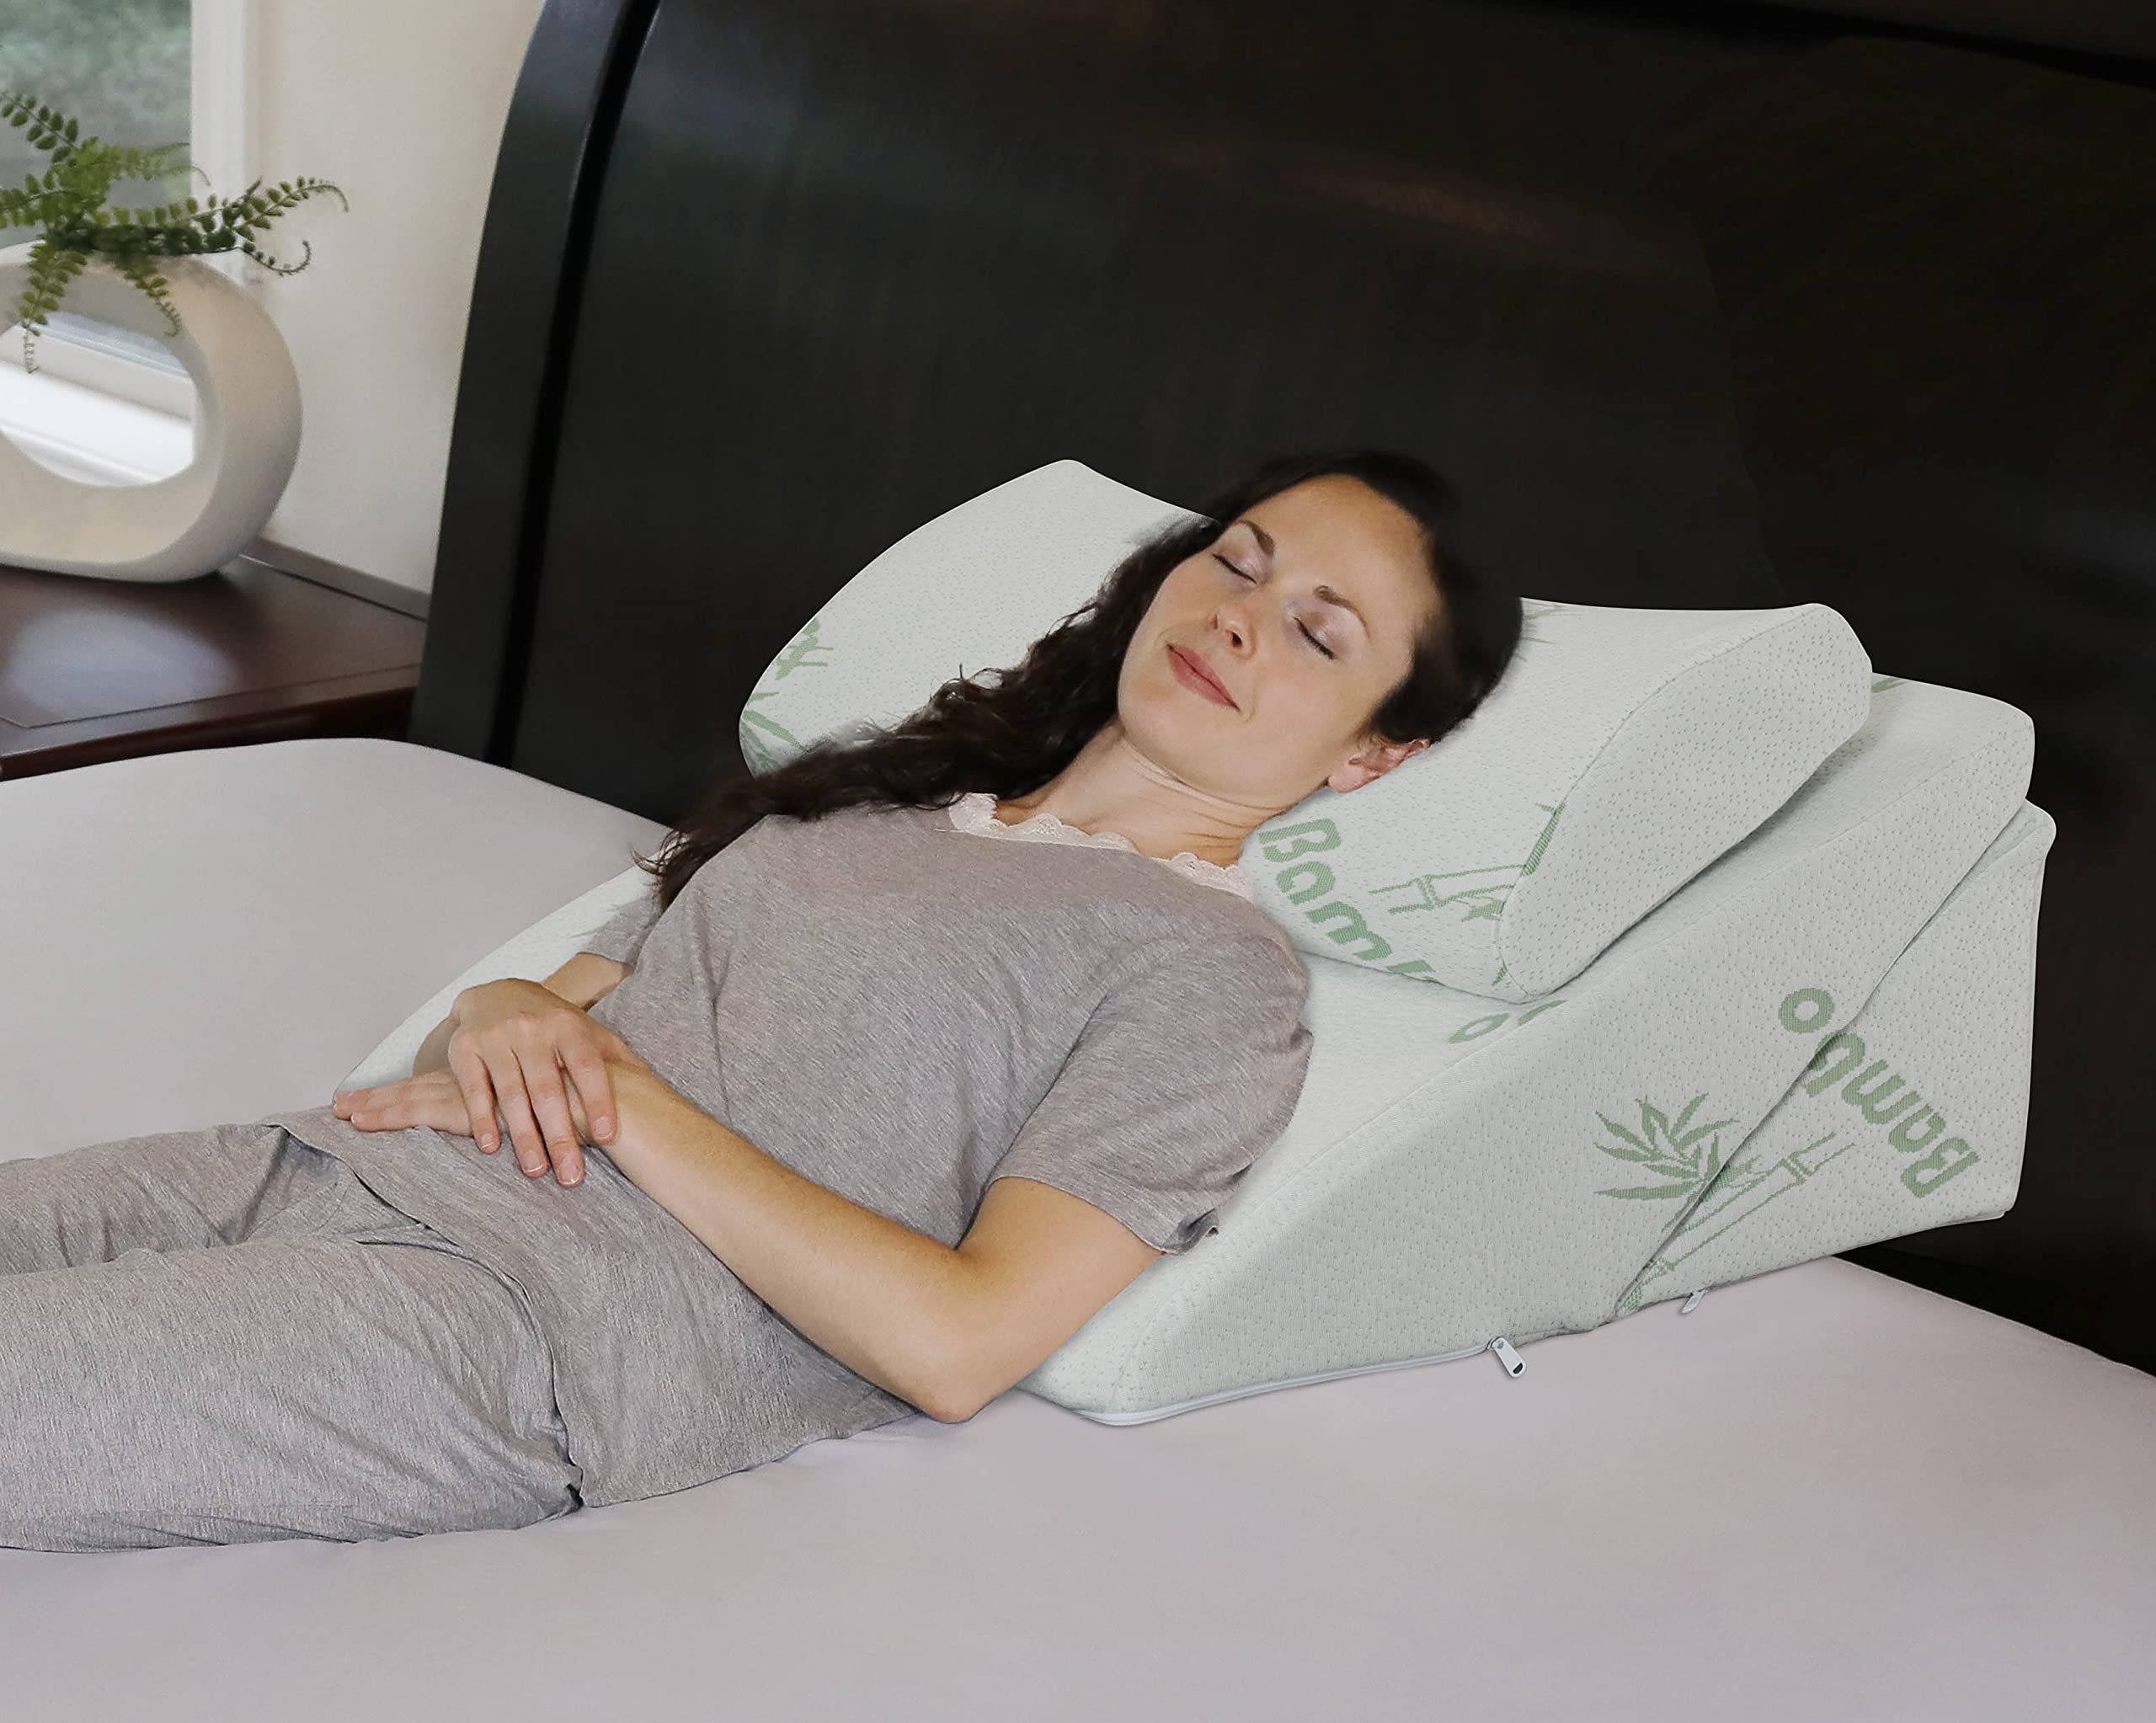 Bed Wedge Pillow, Multipurpose Adjustable Leg Support Pillow